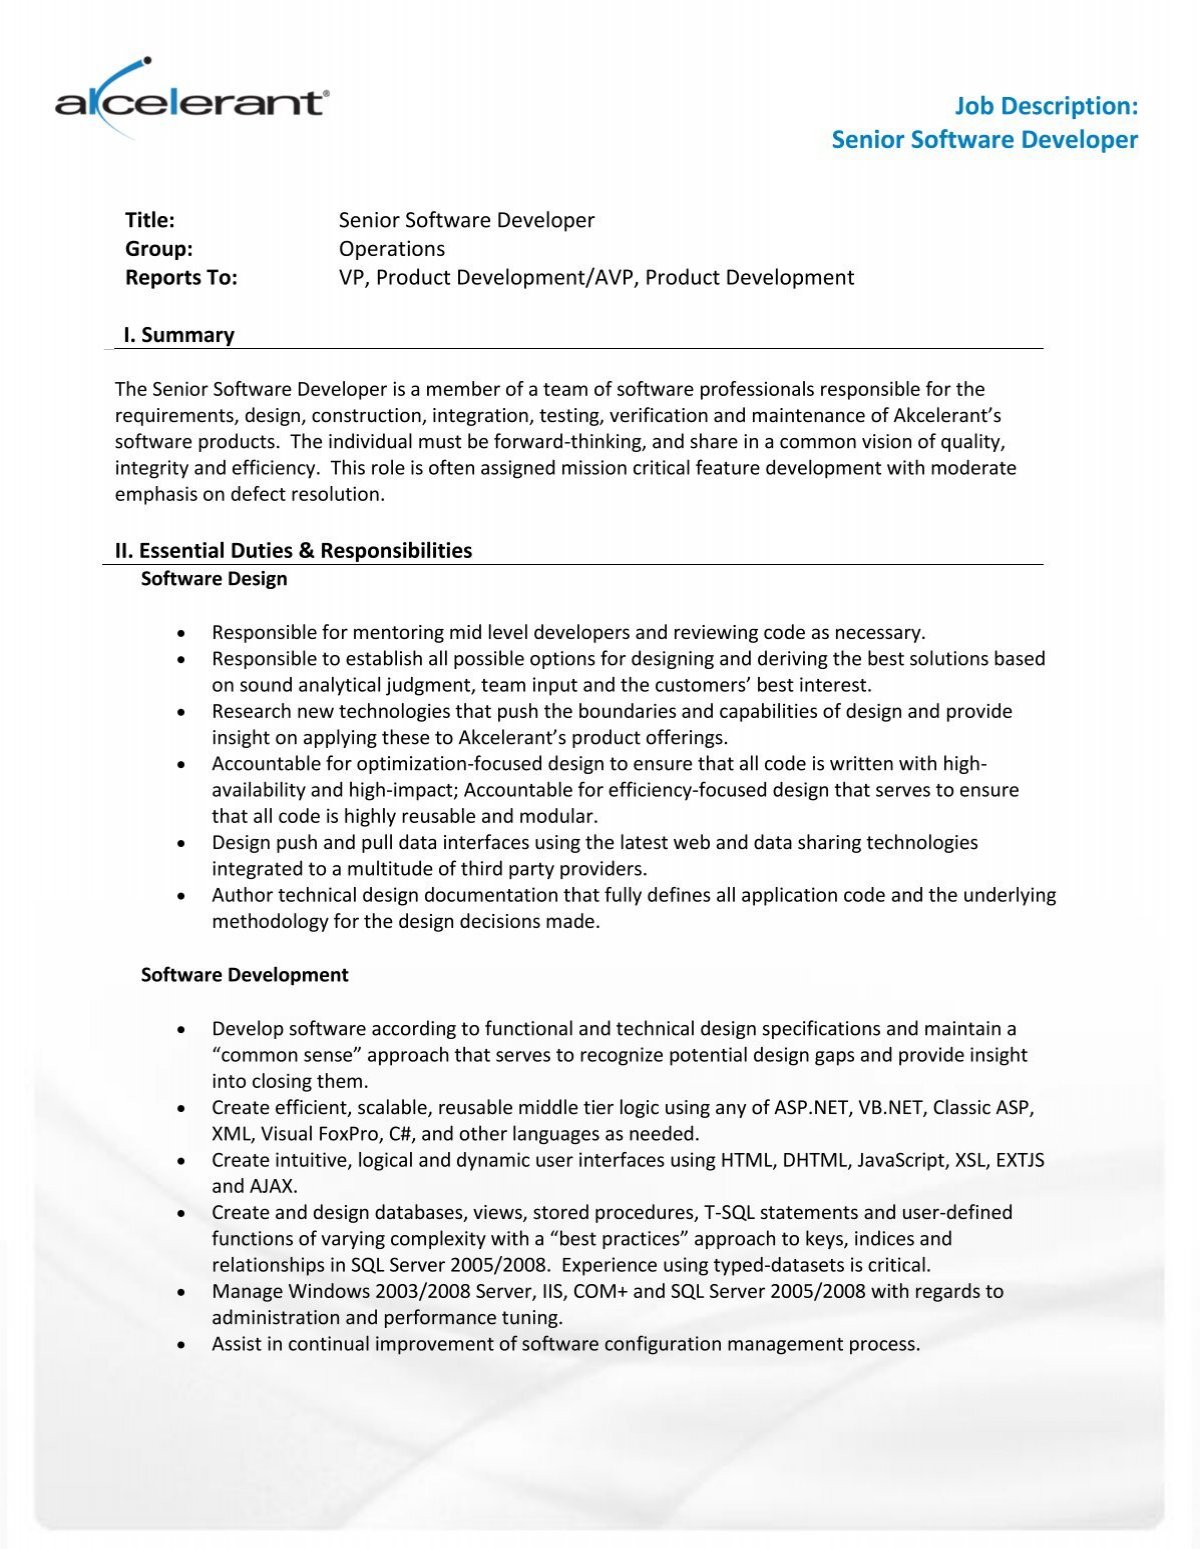 Job Description: Senior Software Developer - Akcelerant